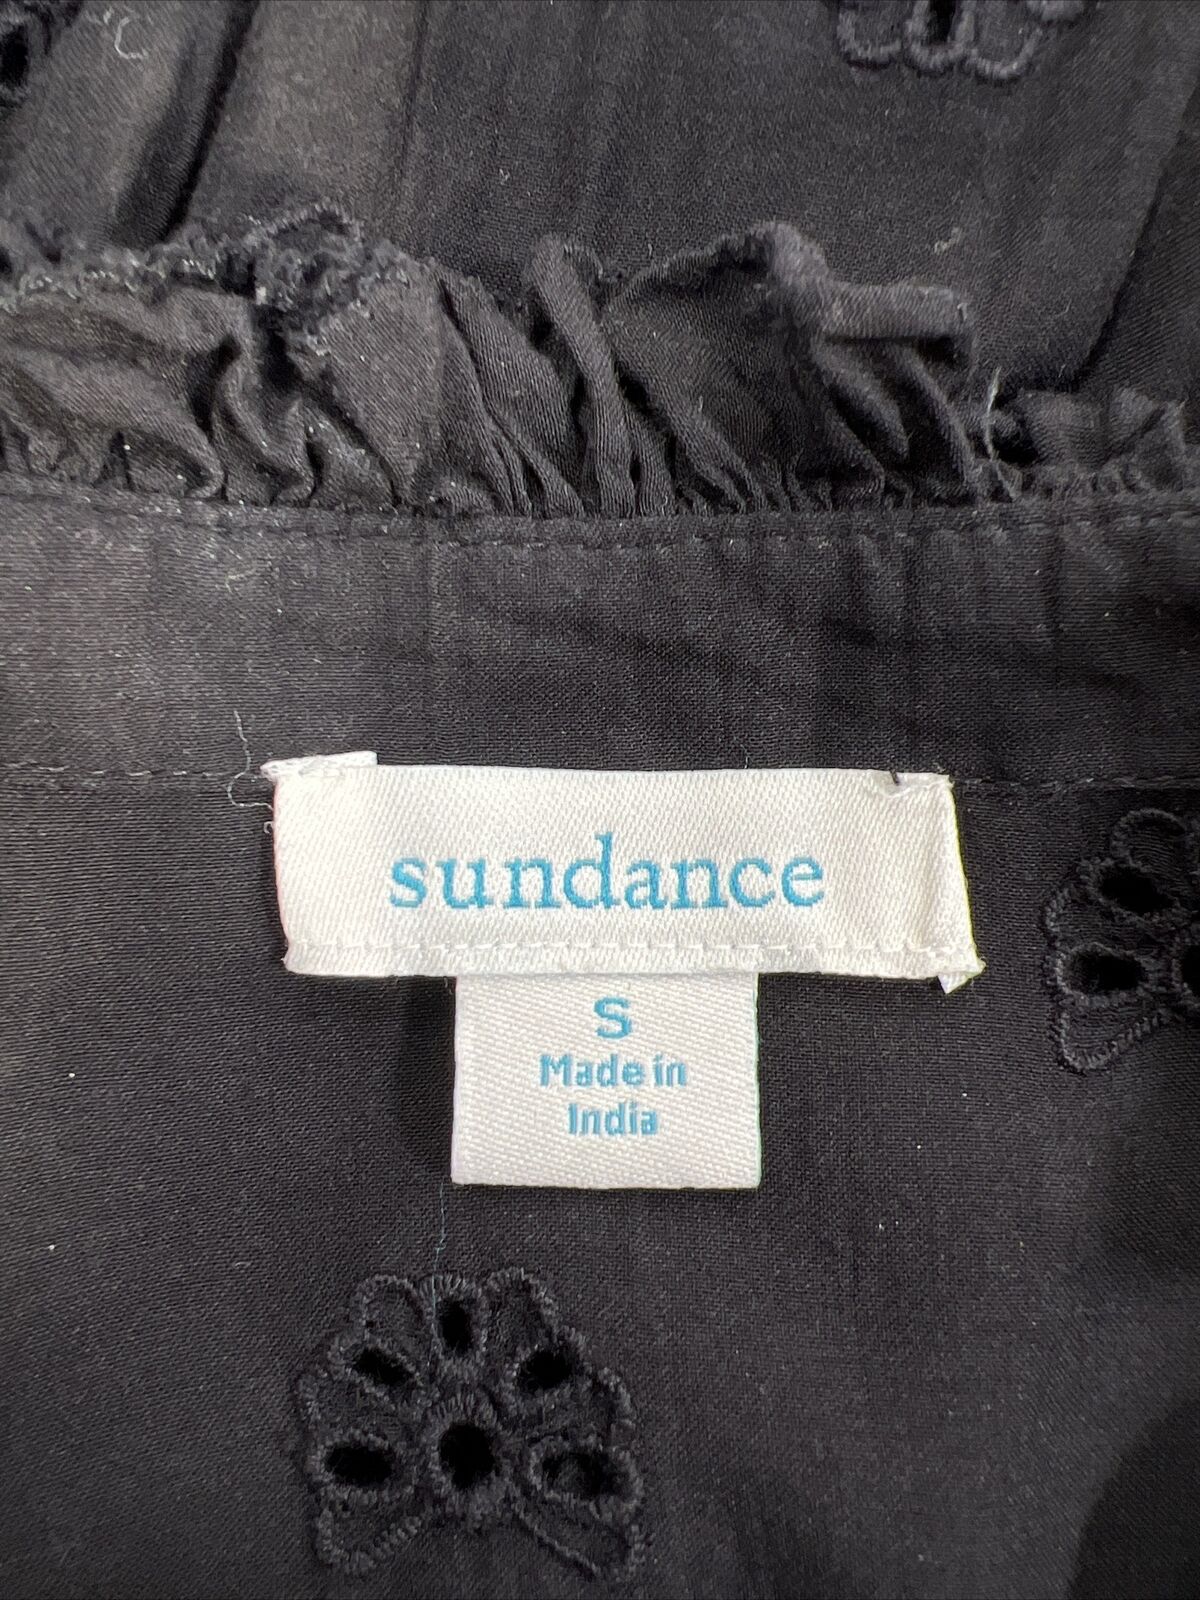 Sundance Women's Black Long Sleeve Embroidered Blouse - S